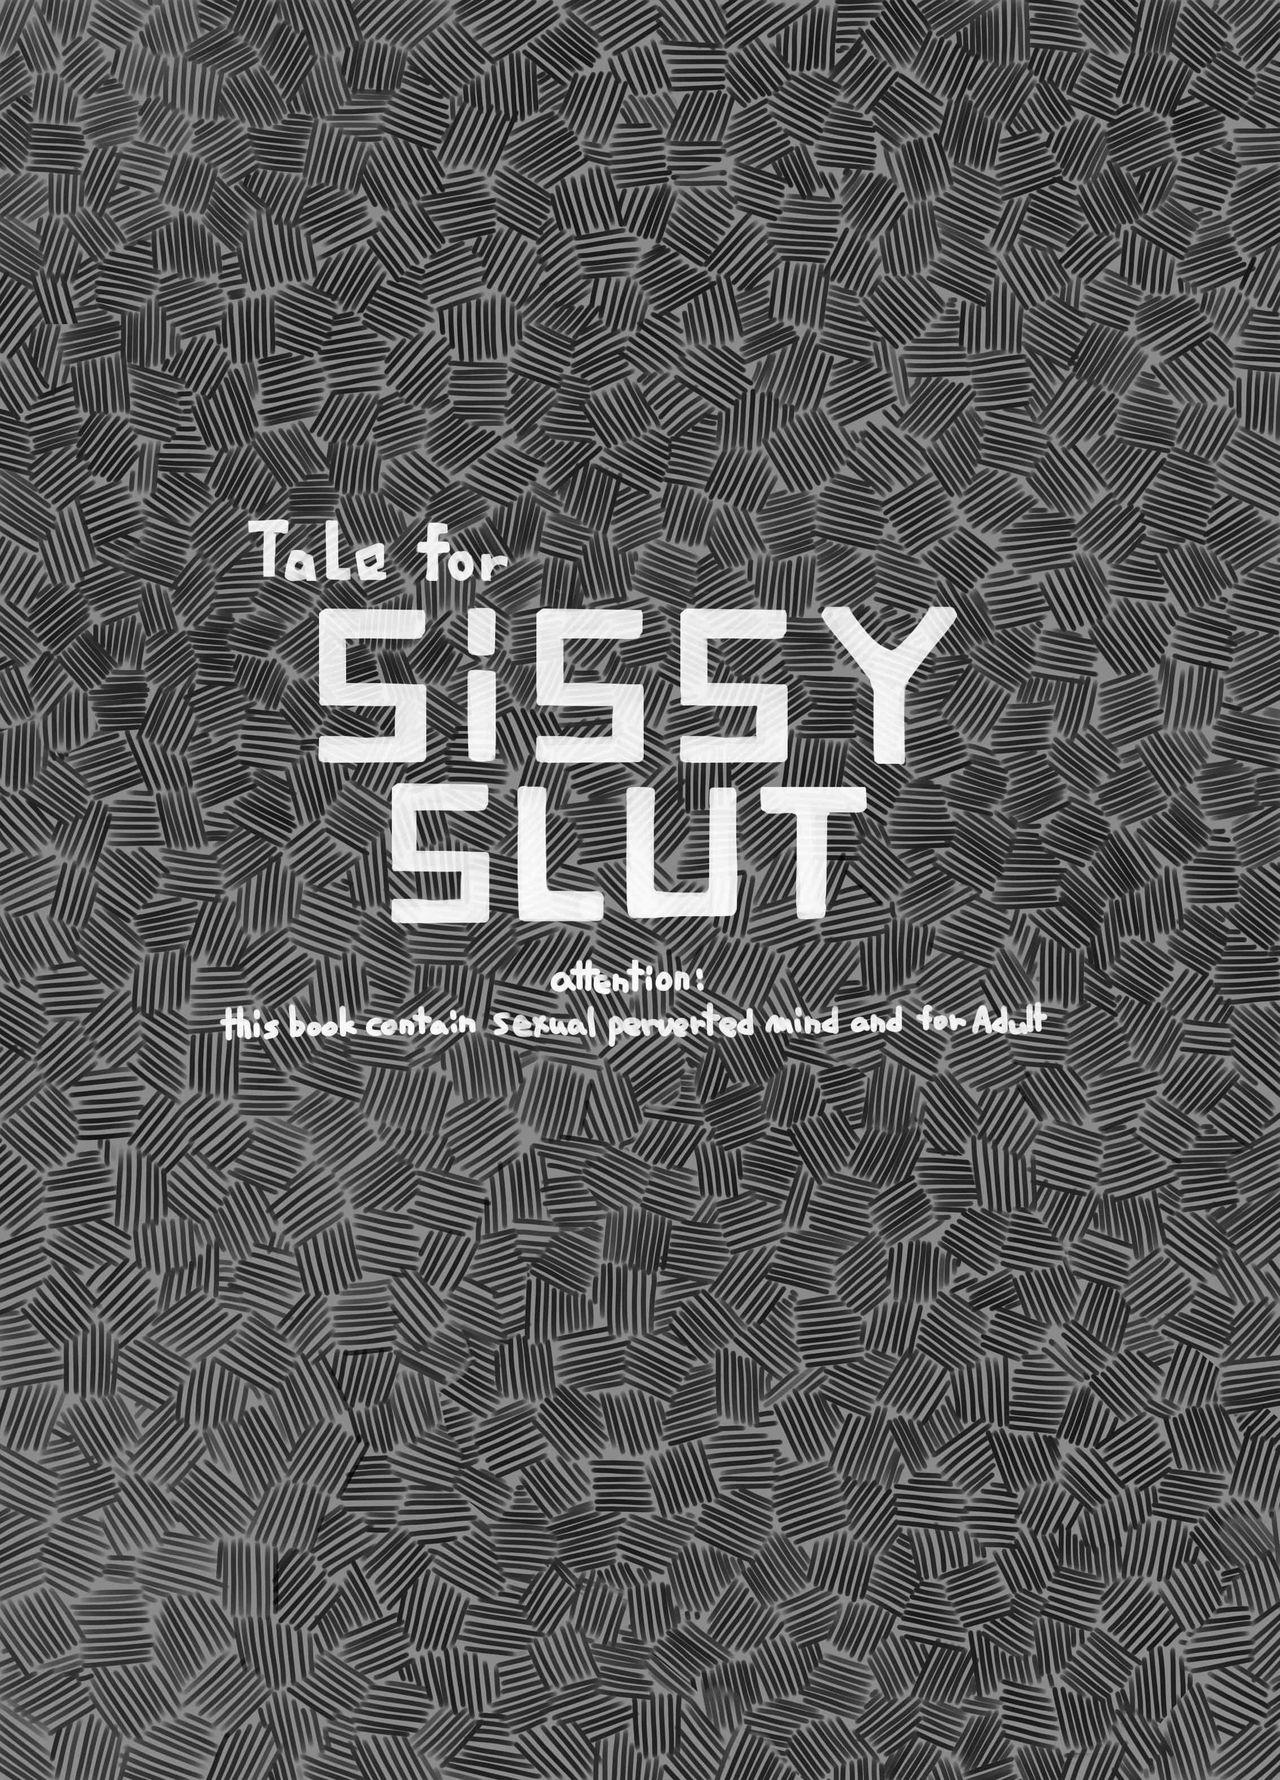 Tale for SiSSY SLUT 0